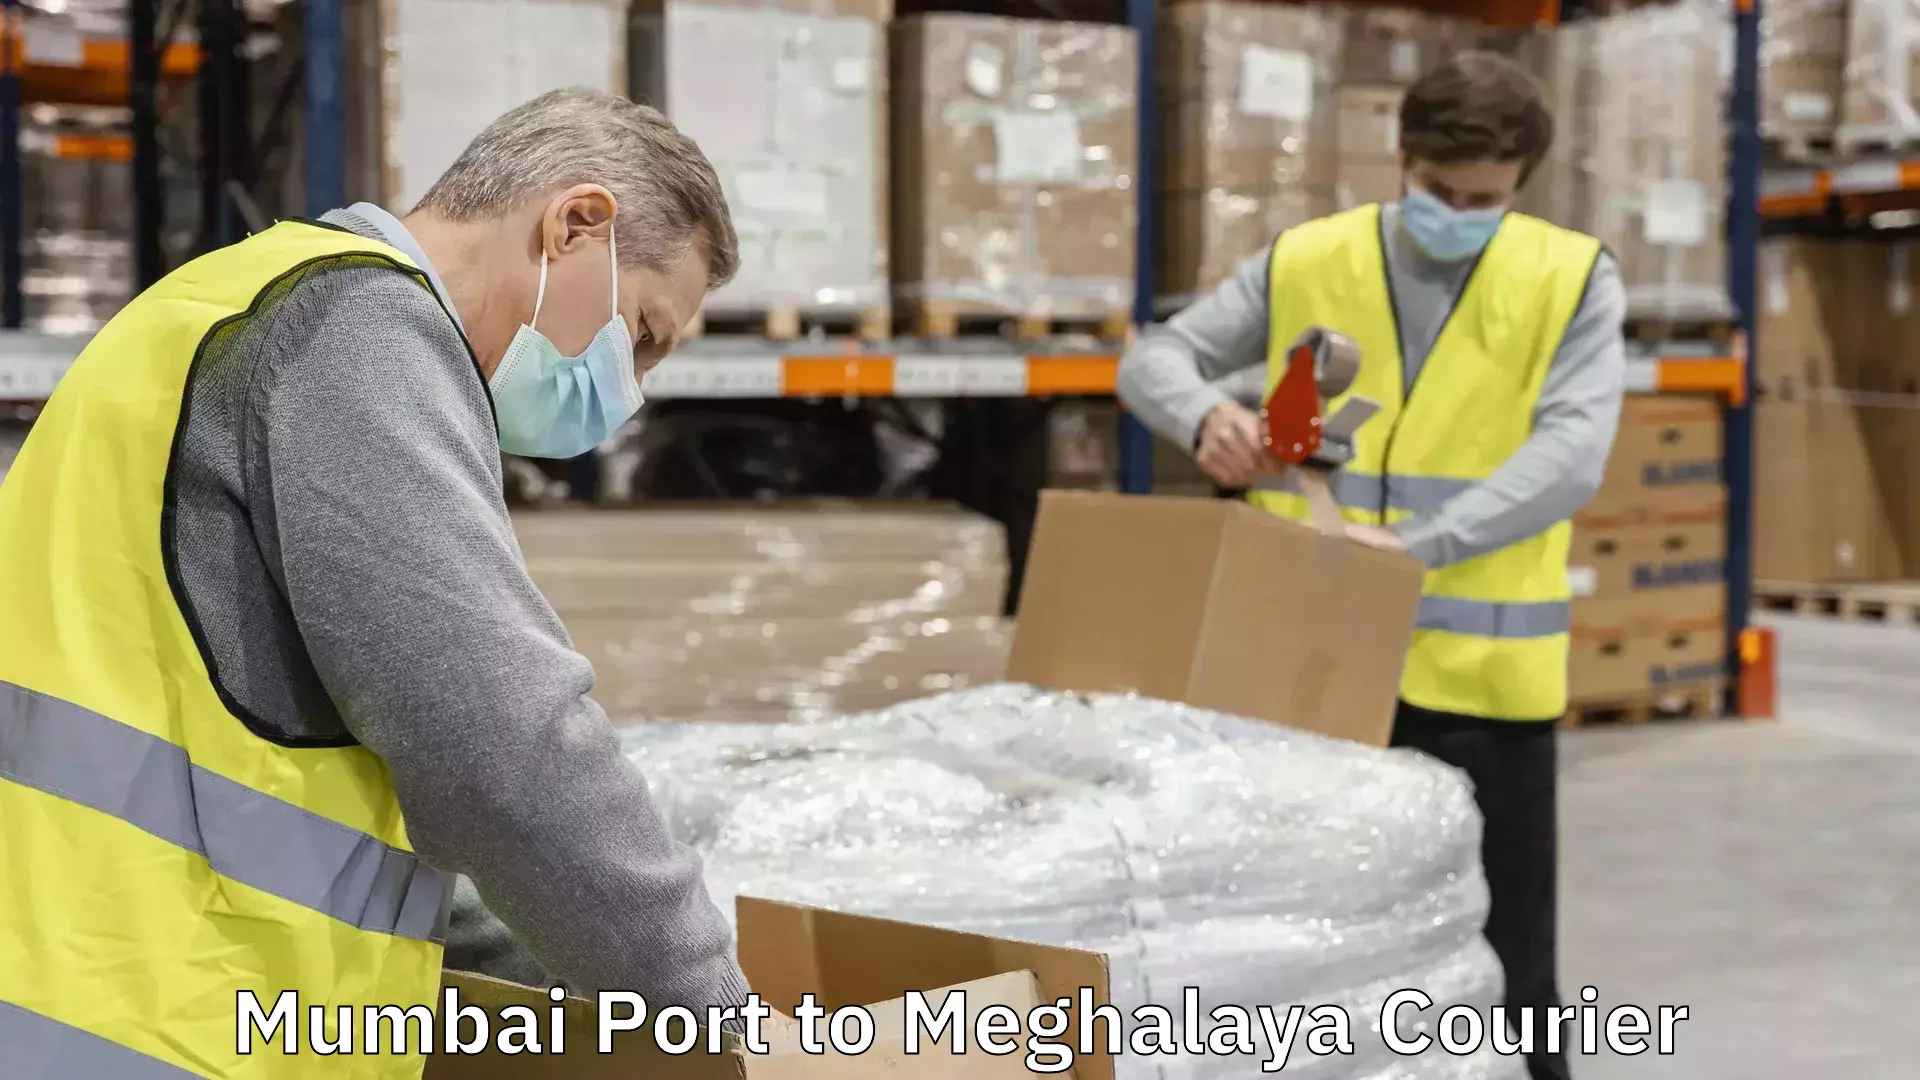 High-priority parcel service Mumbai Port to Meghalaya